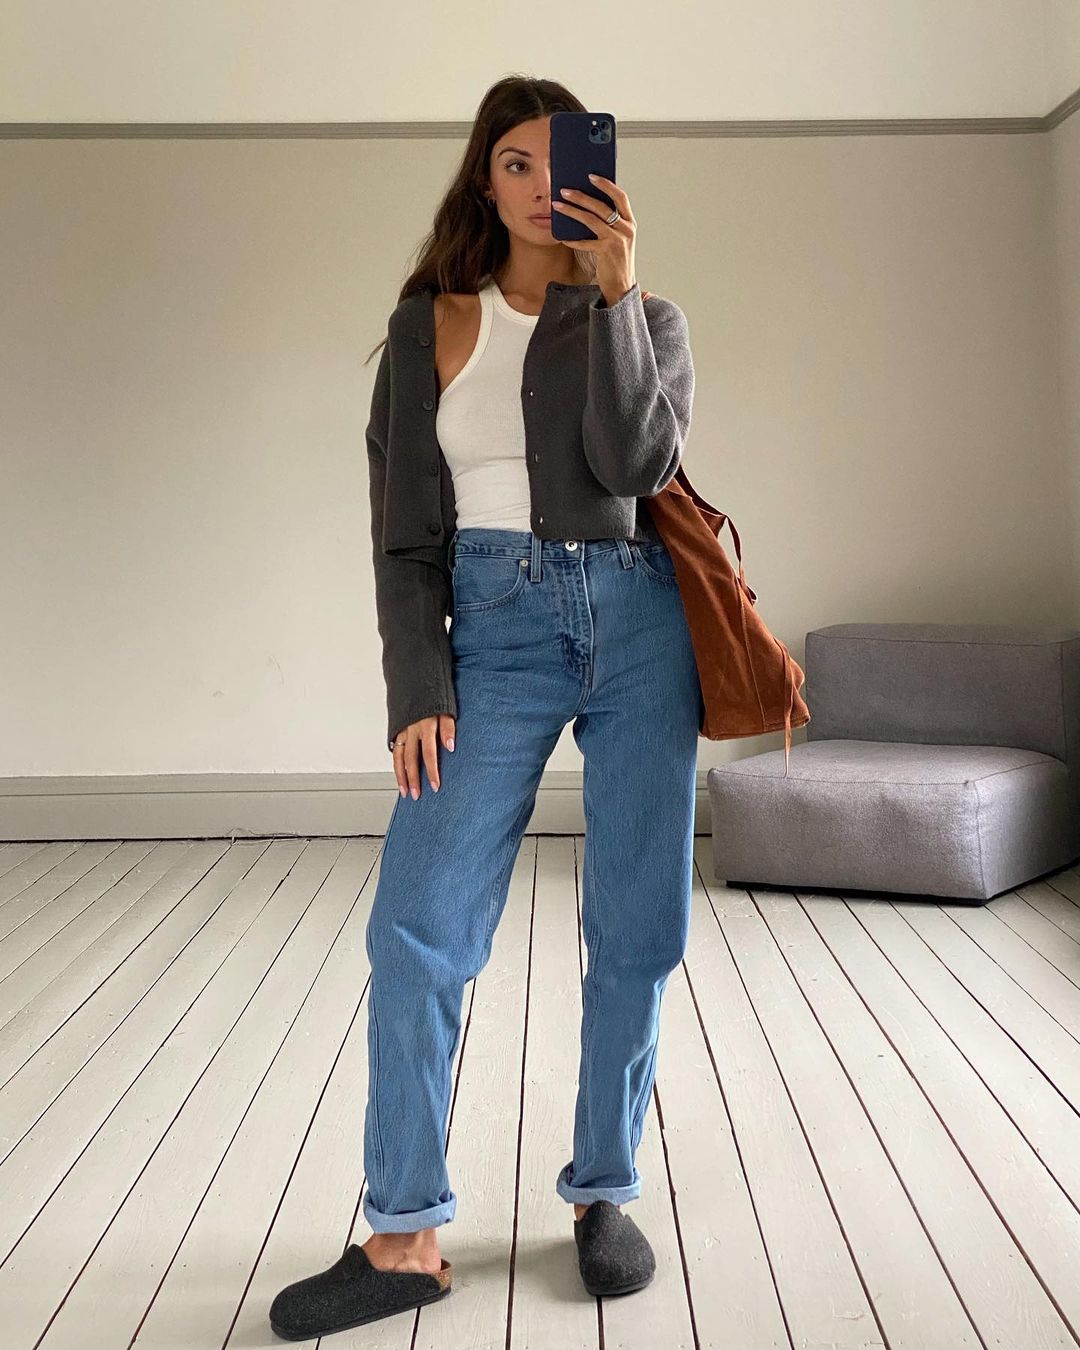 Zara shopping tips: Marianne Smyth wears a cardigan from Zara